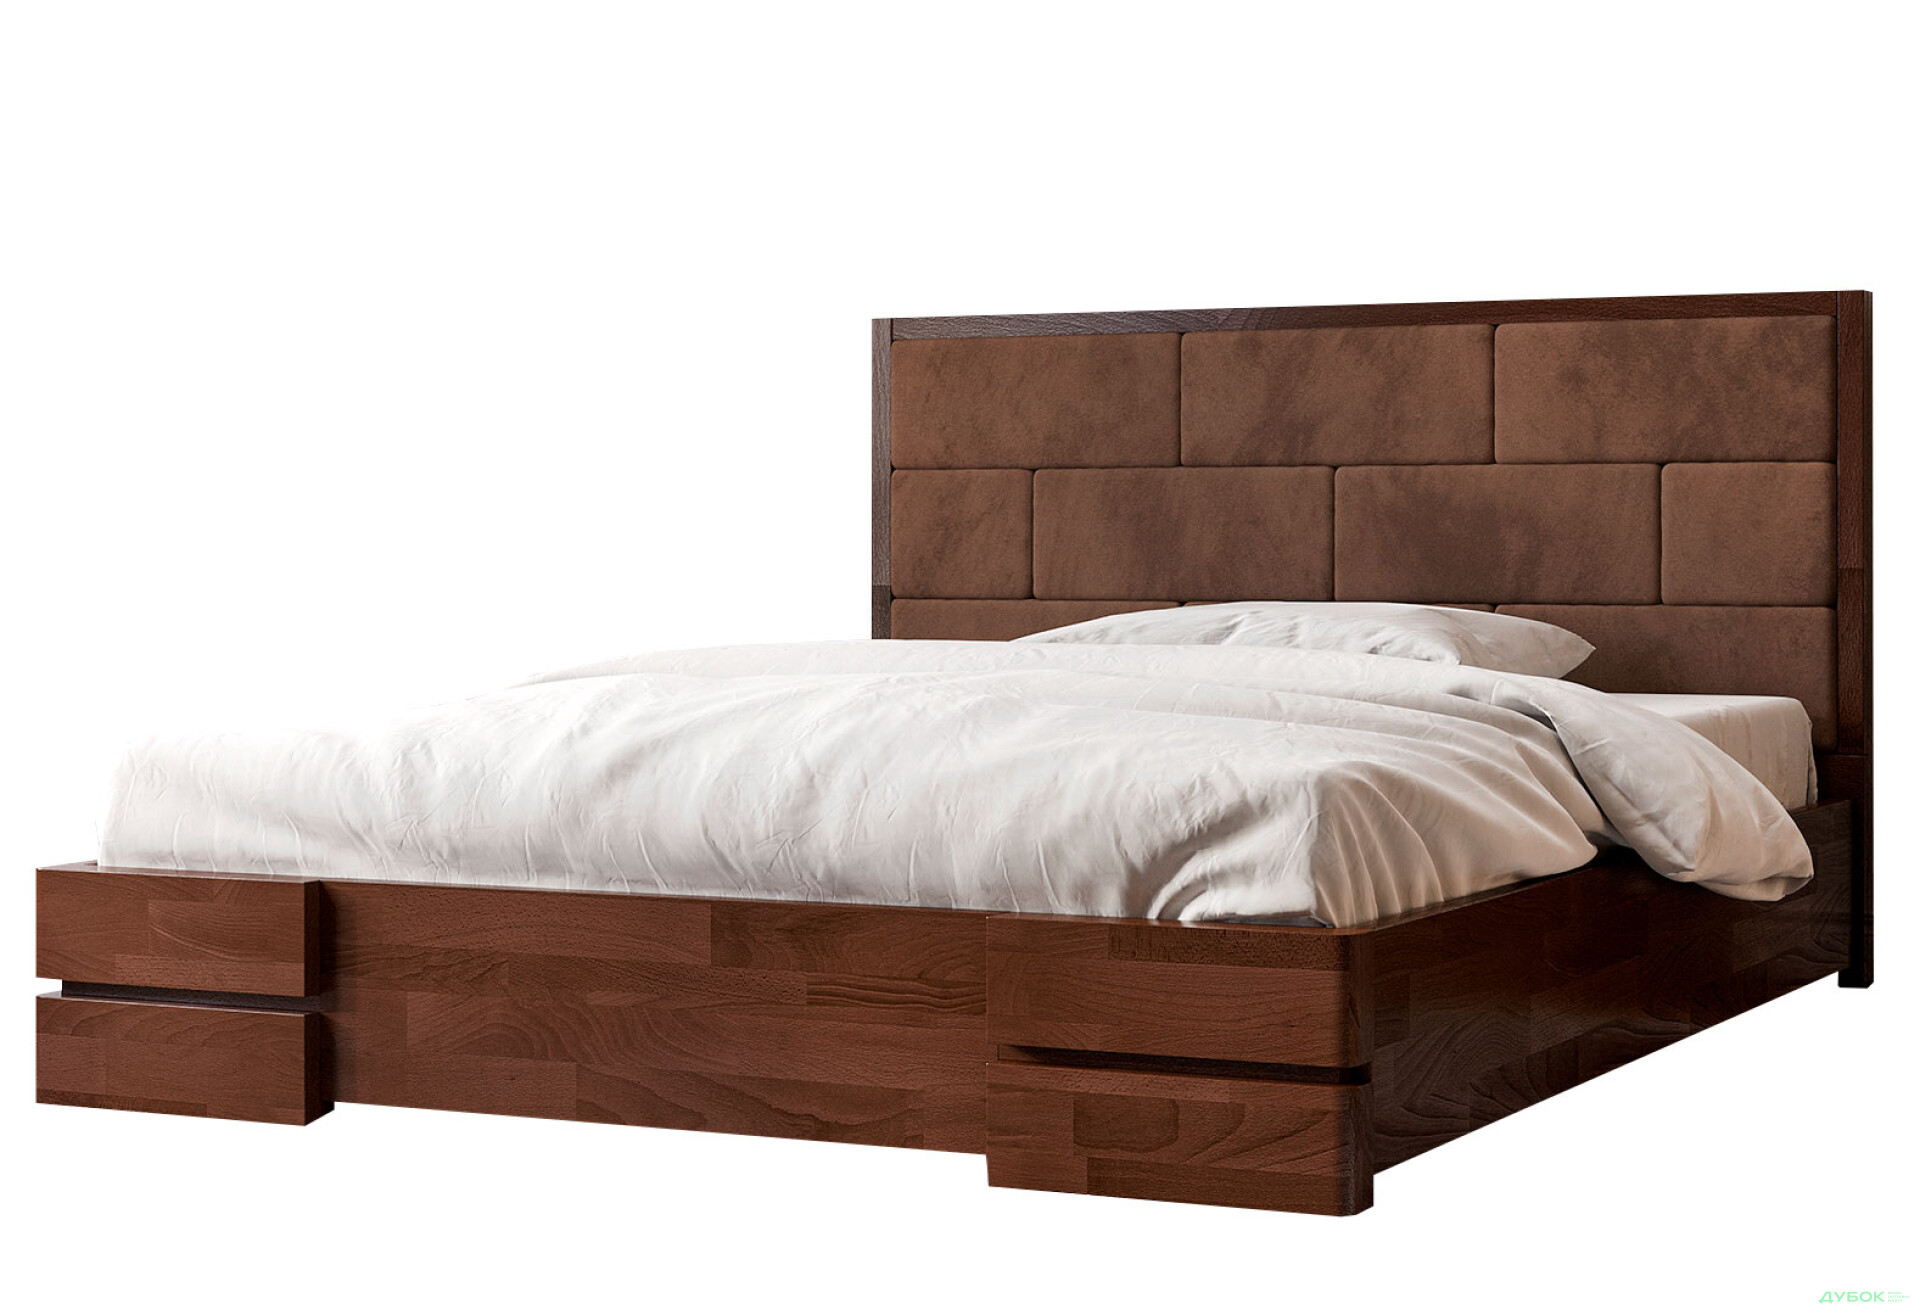 Фото 2 - Ліжко-подіум Arbor Drev Тоскана (сосна) 160 см підйомне